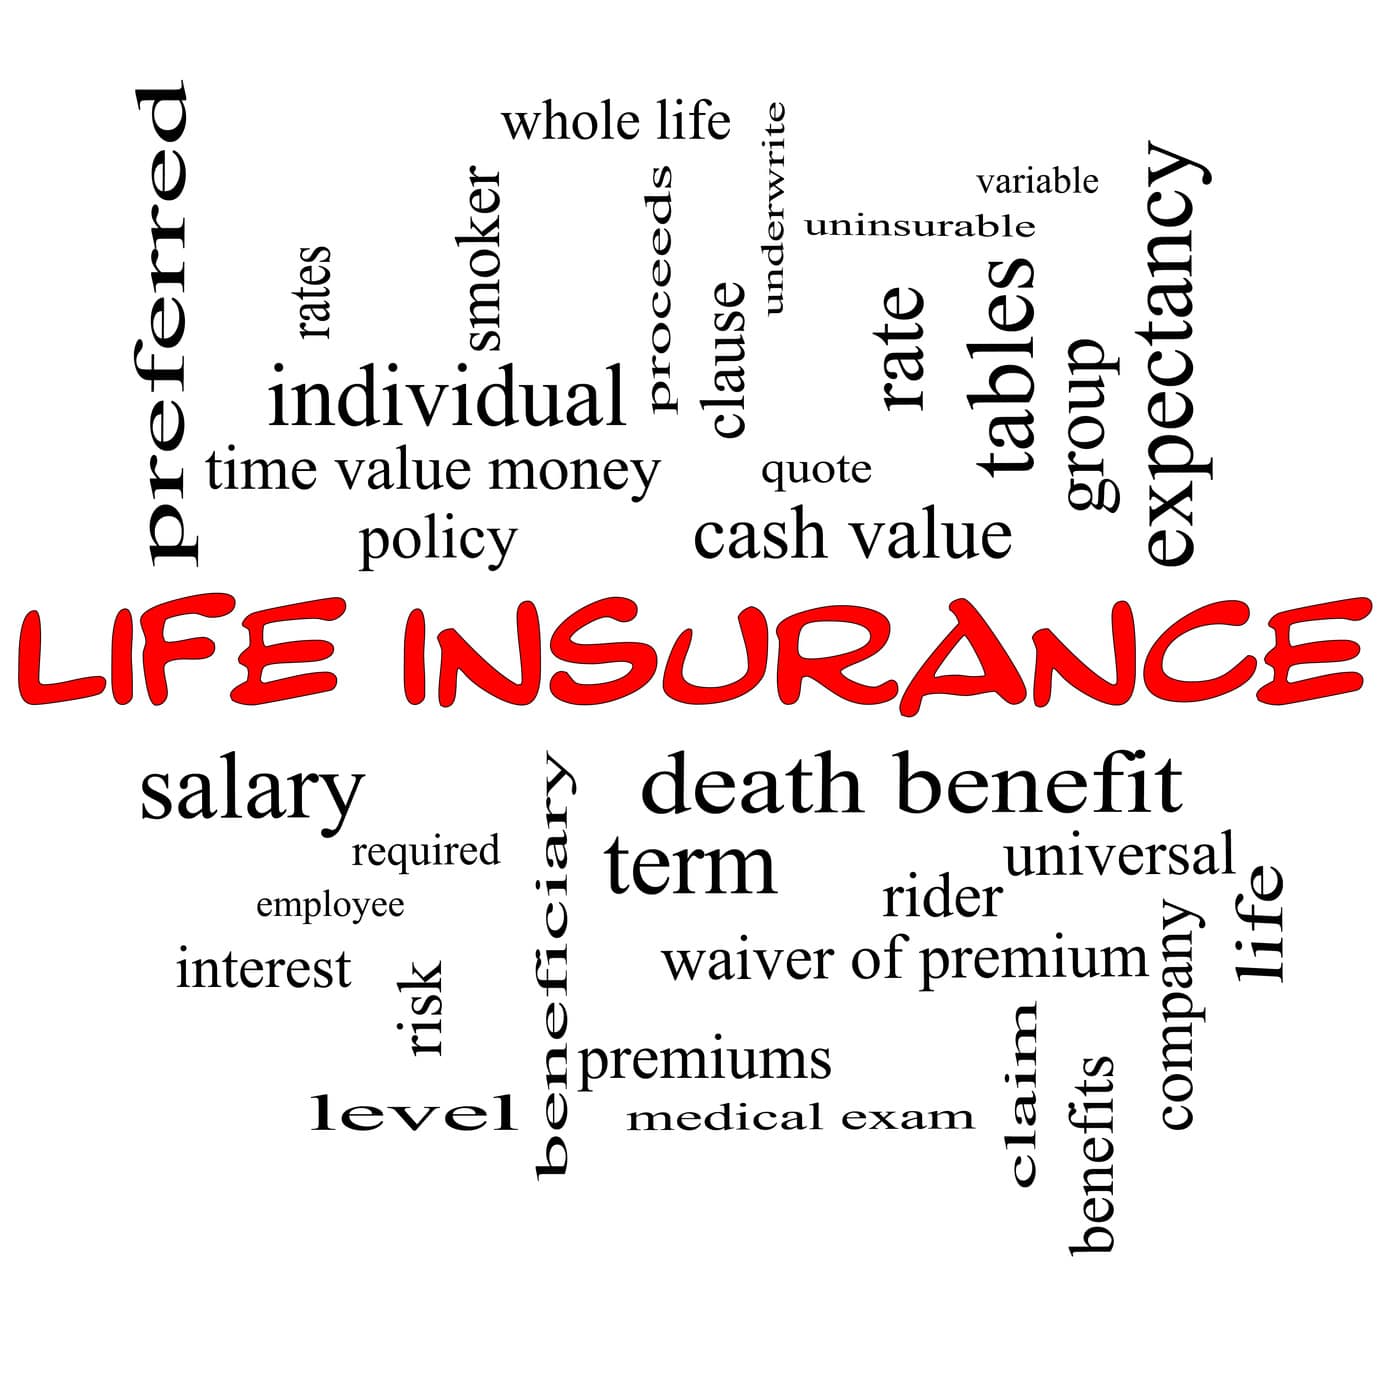 term-life-insurance-described.jpg